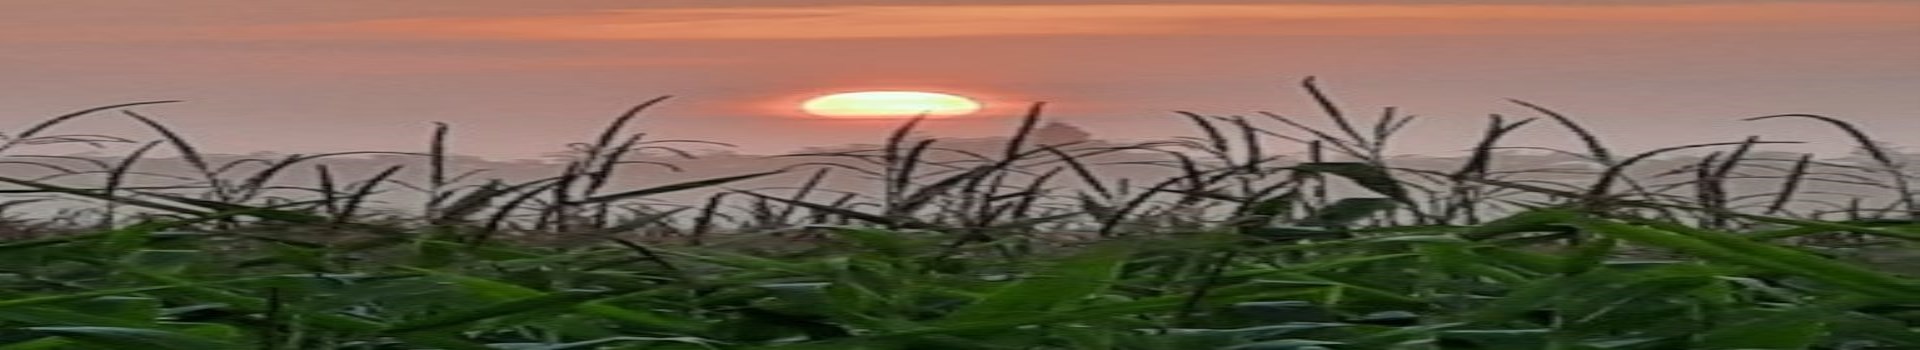 sunset through the corn field